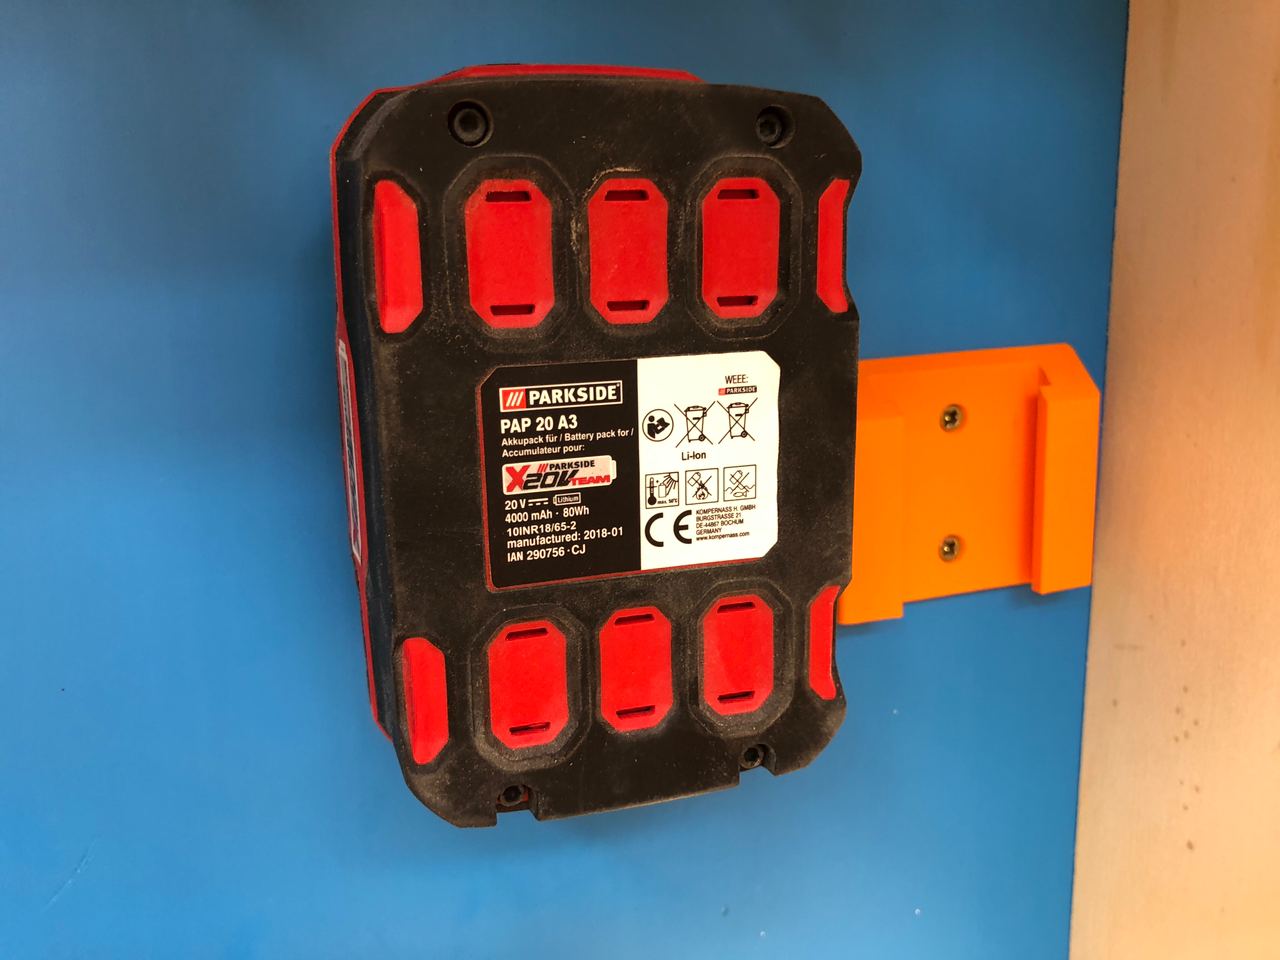 Parkside battery wall mount for 20V batteries - Battery holder